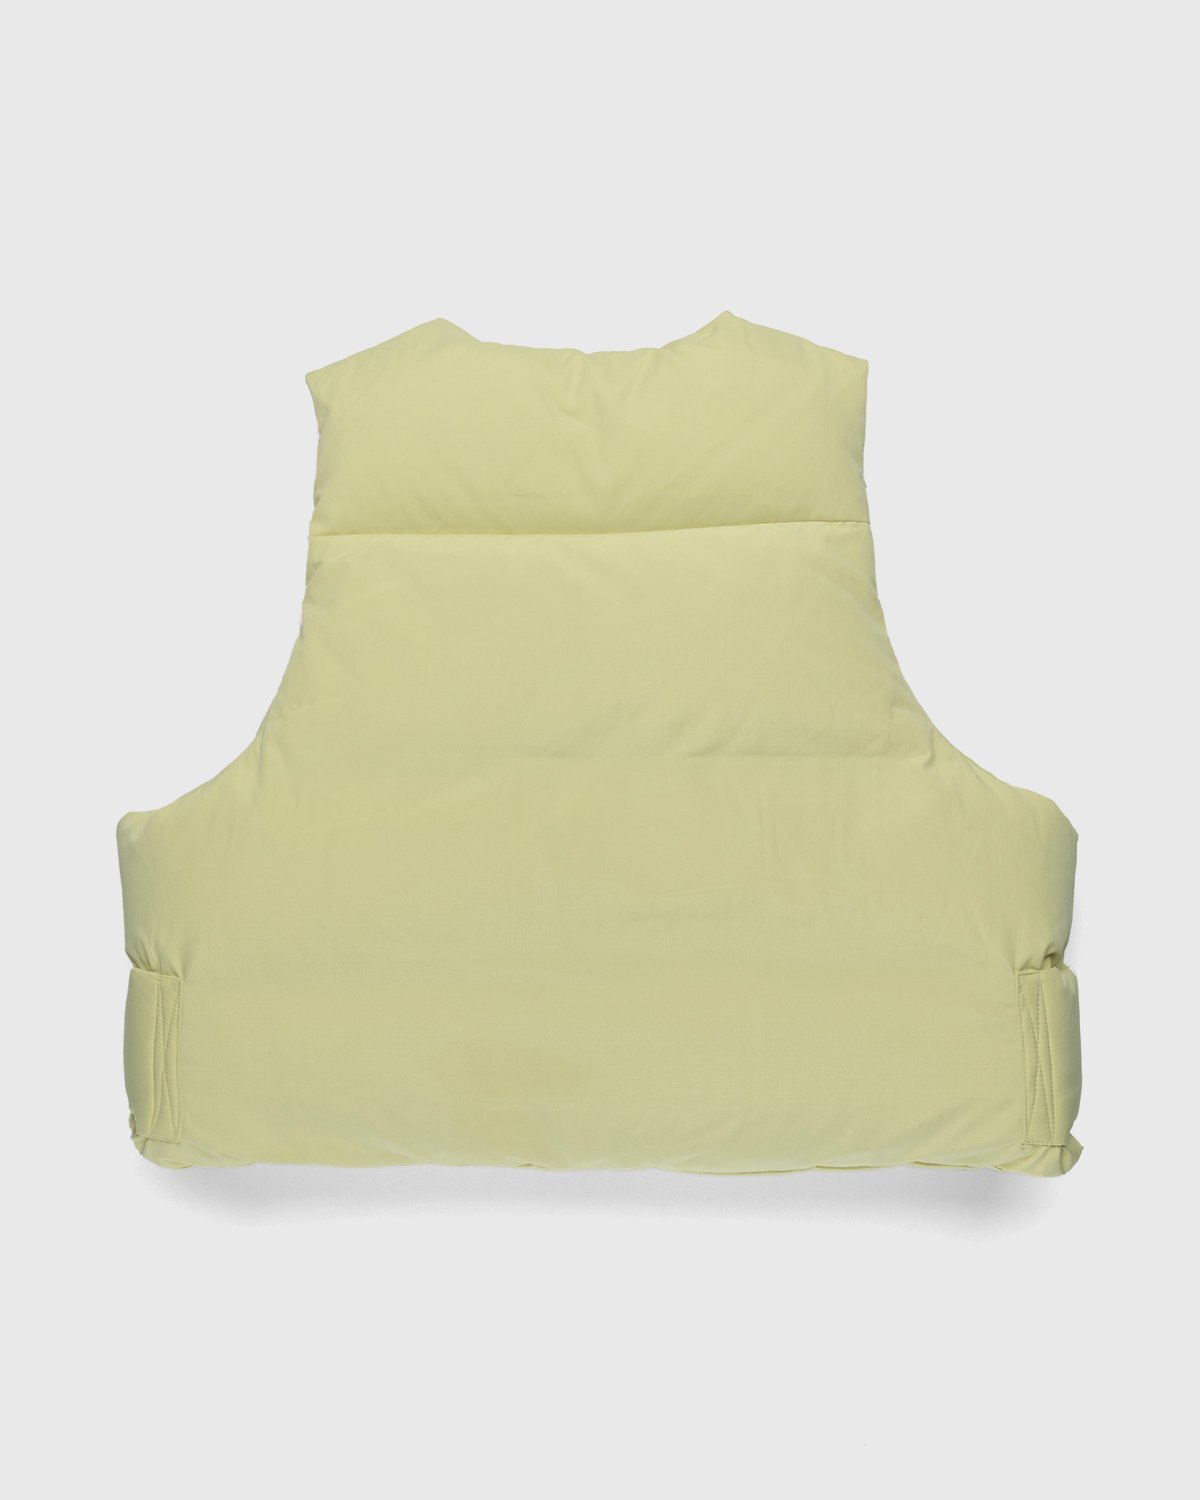 Entire Studios - Pillow Vest Blonde - Clothing - Yellow - Image 2